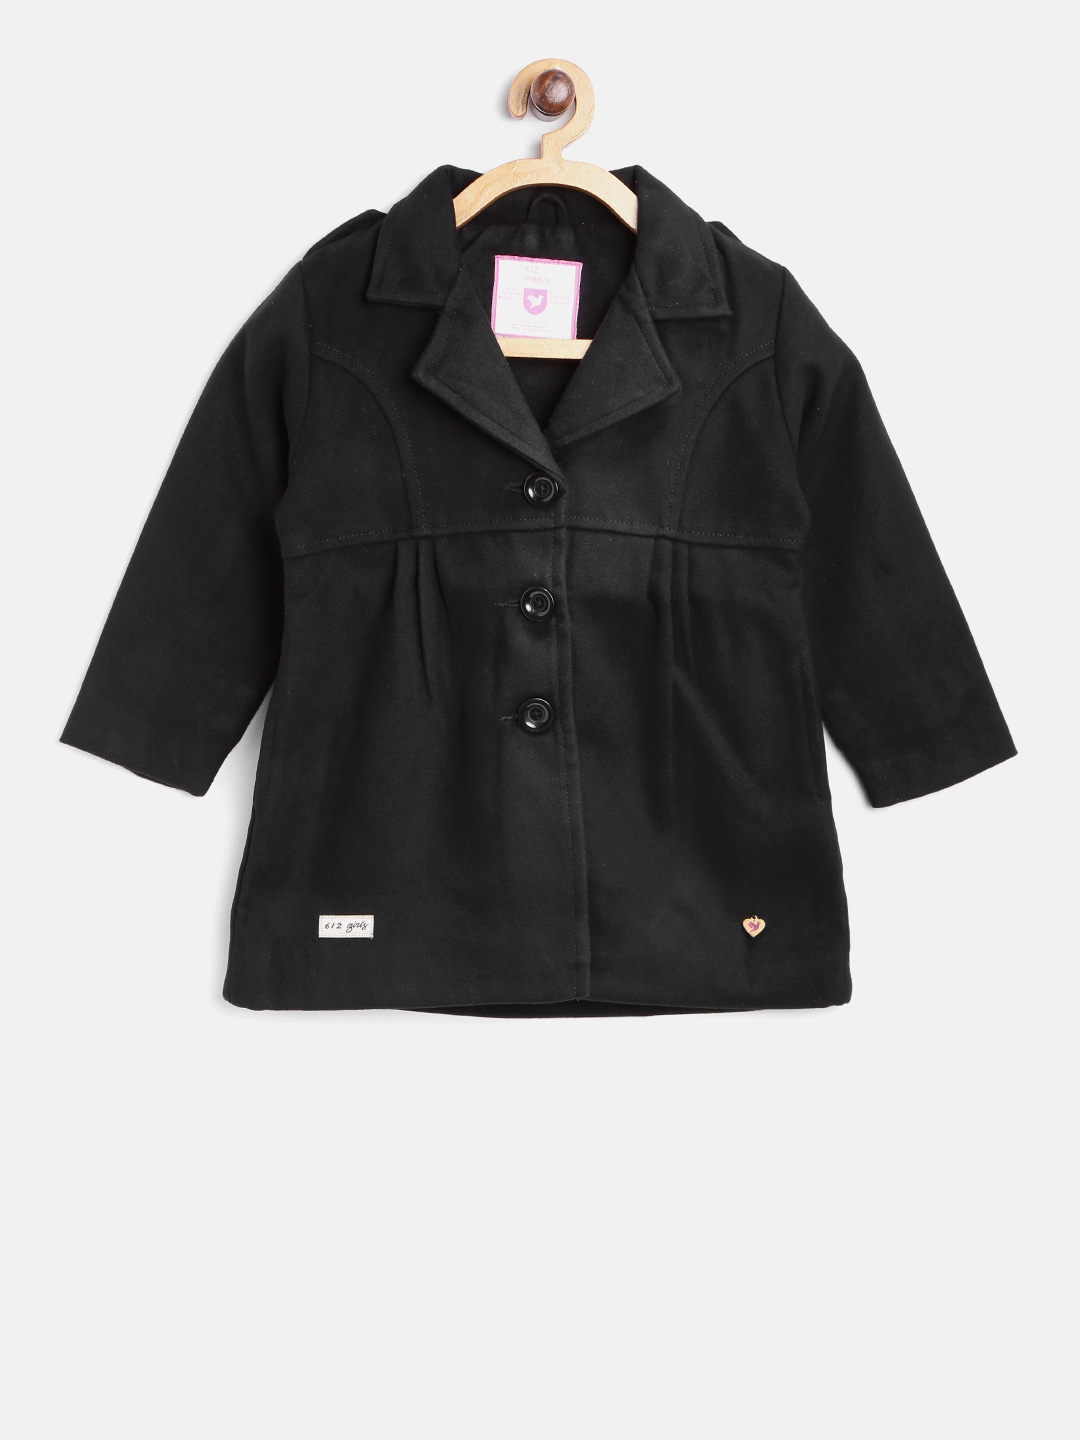 612 League Girls Black Pea Coat Coats, Toddler Girl Black Pea Coat